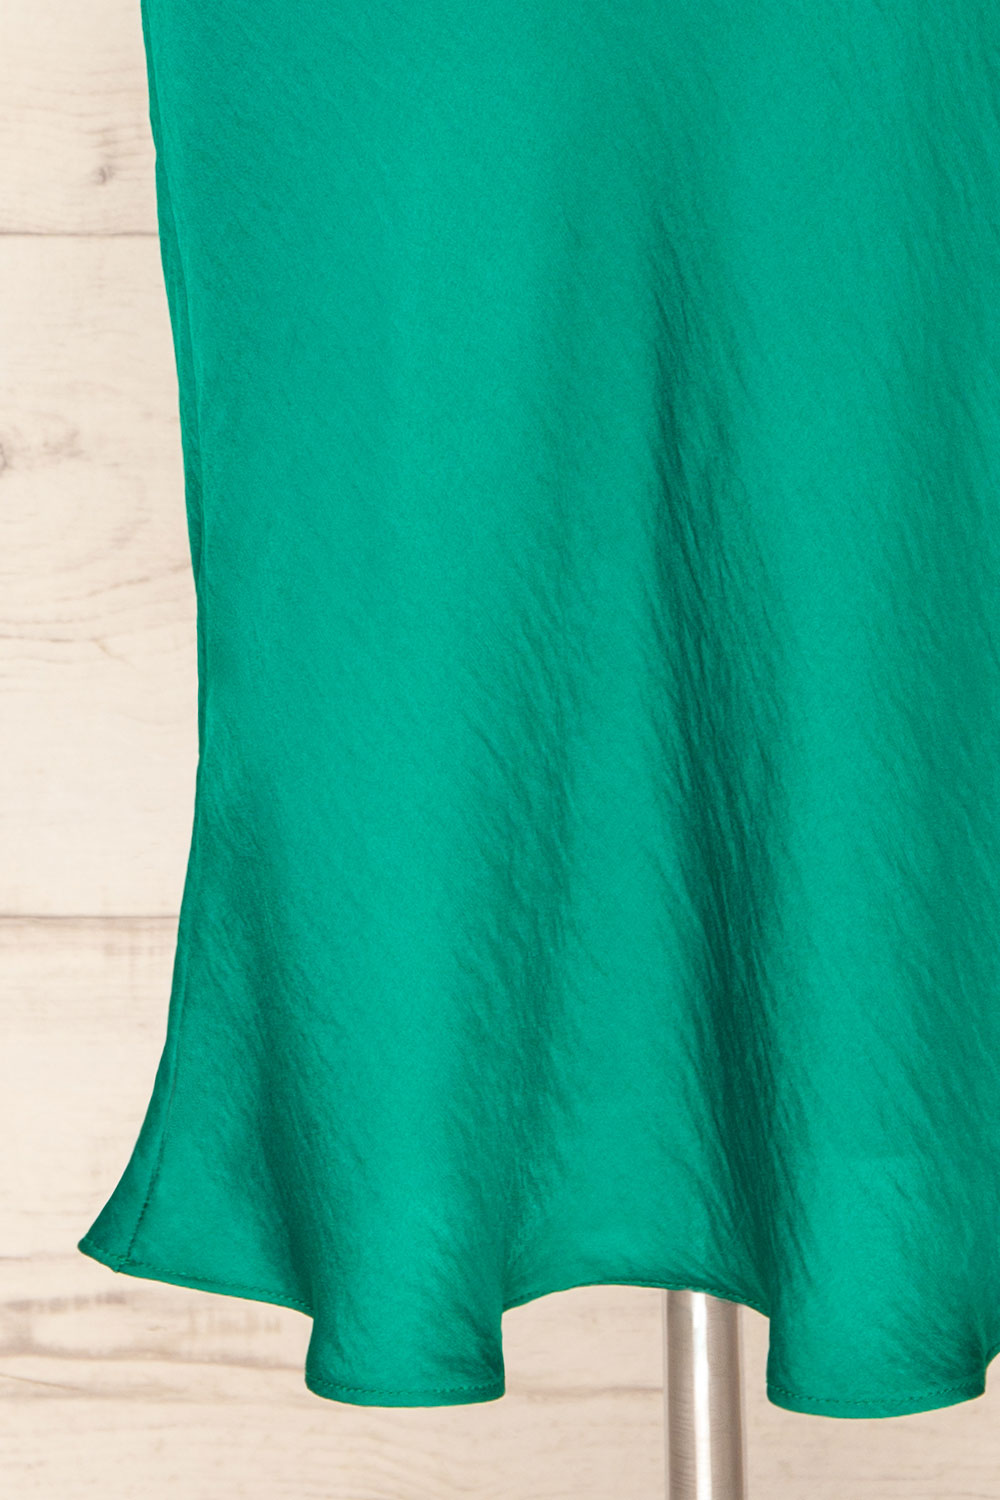 Nikaia Green Silky High-Waisted Midi Skirt | La petite garçonne skirt